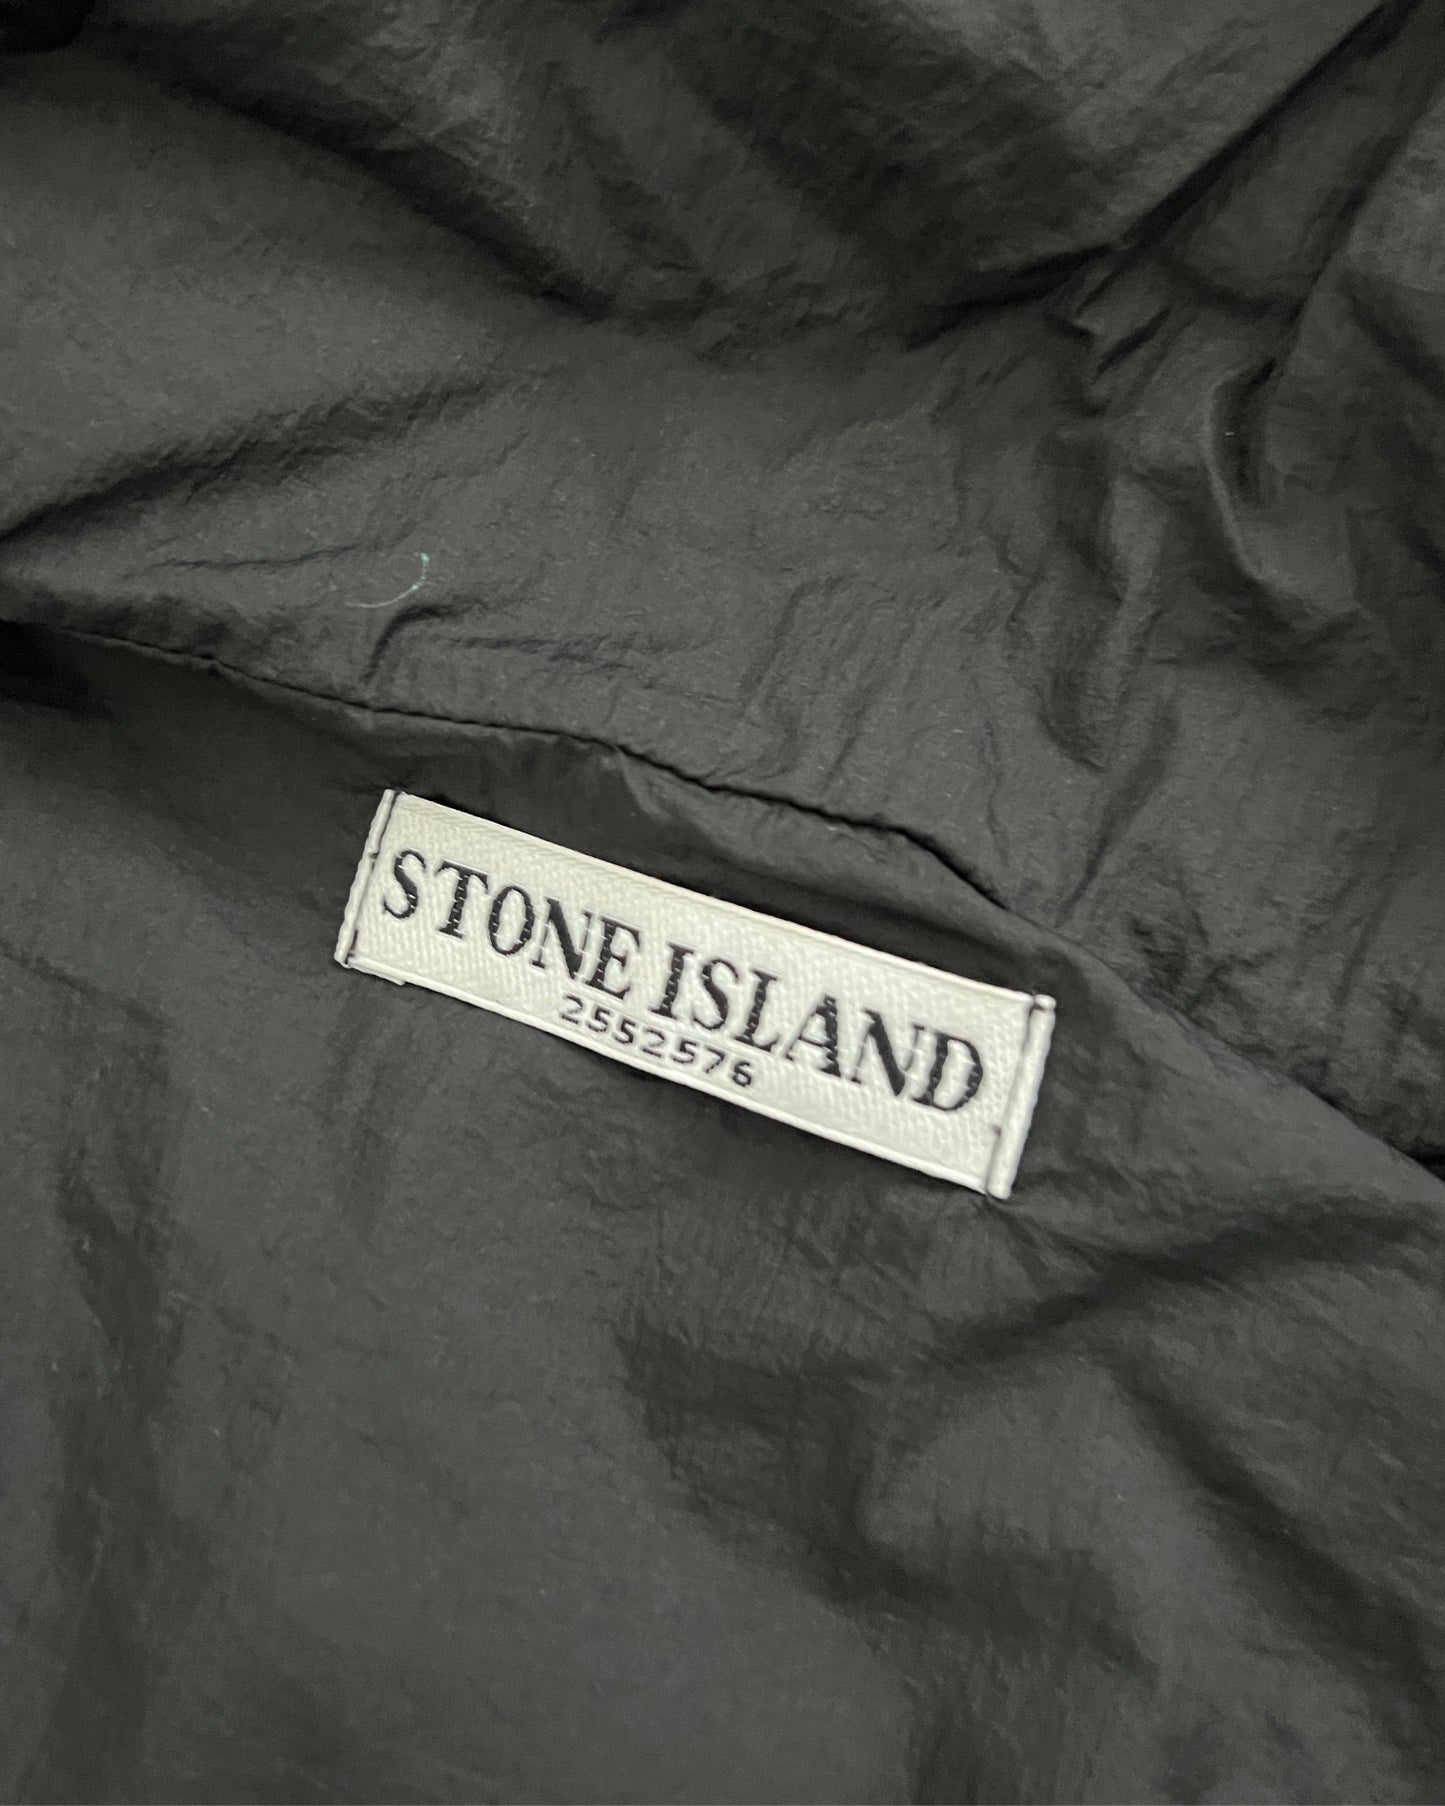 Stone Island AW2009 Opaque Nylon Tela Puffer Vest - Size S